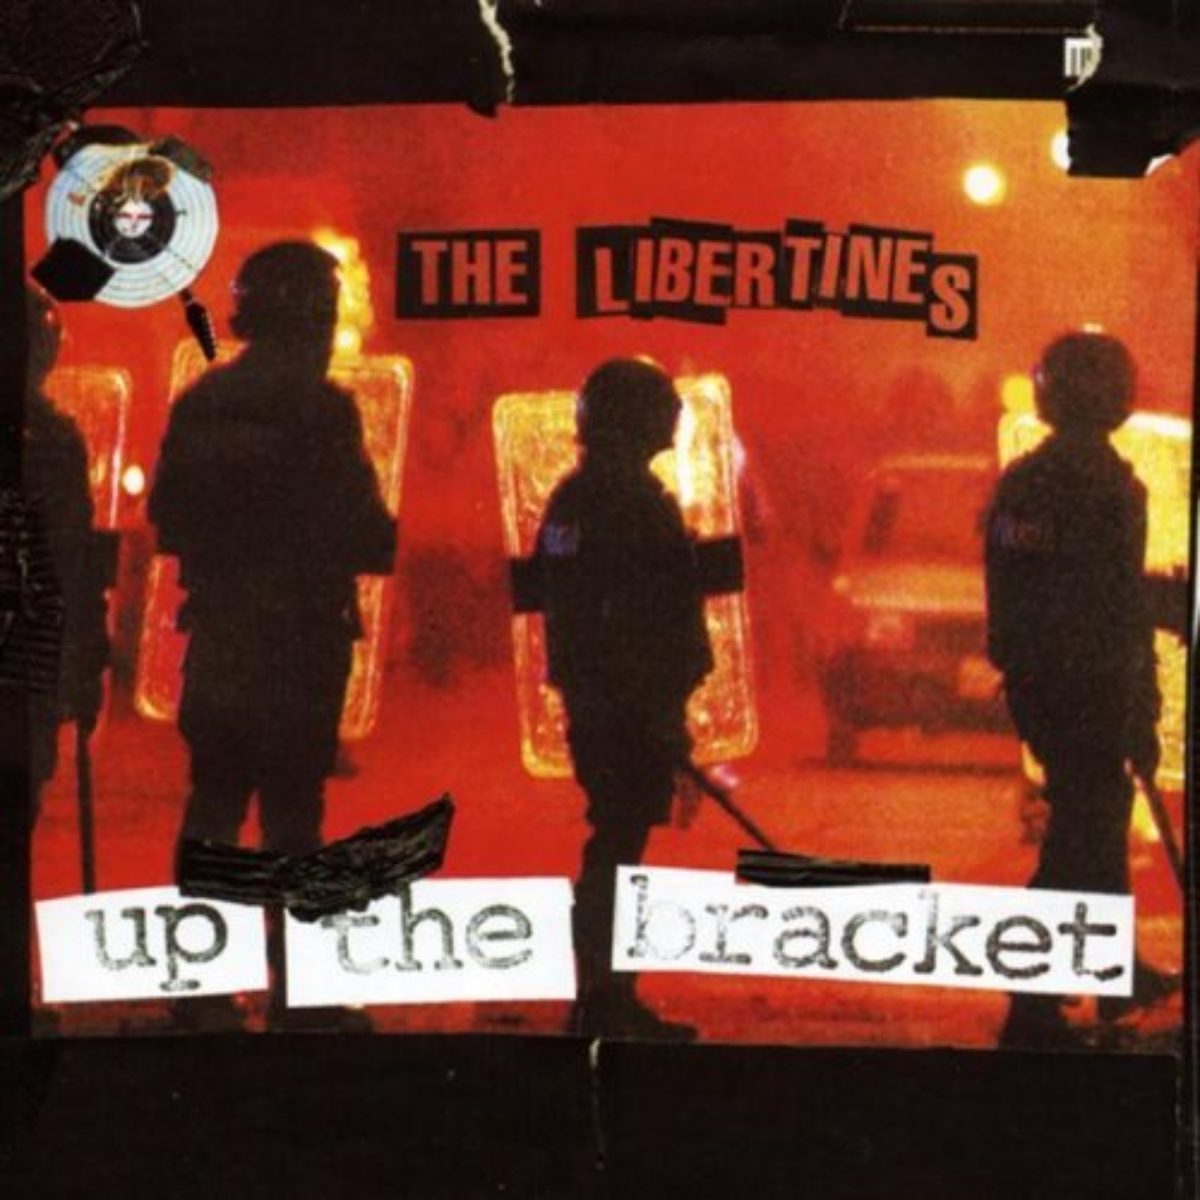 The Libertines "Up The Braket" CD